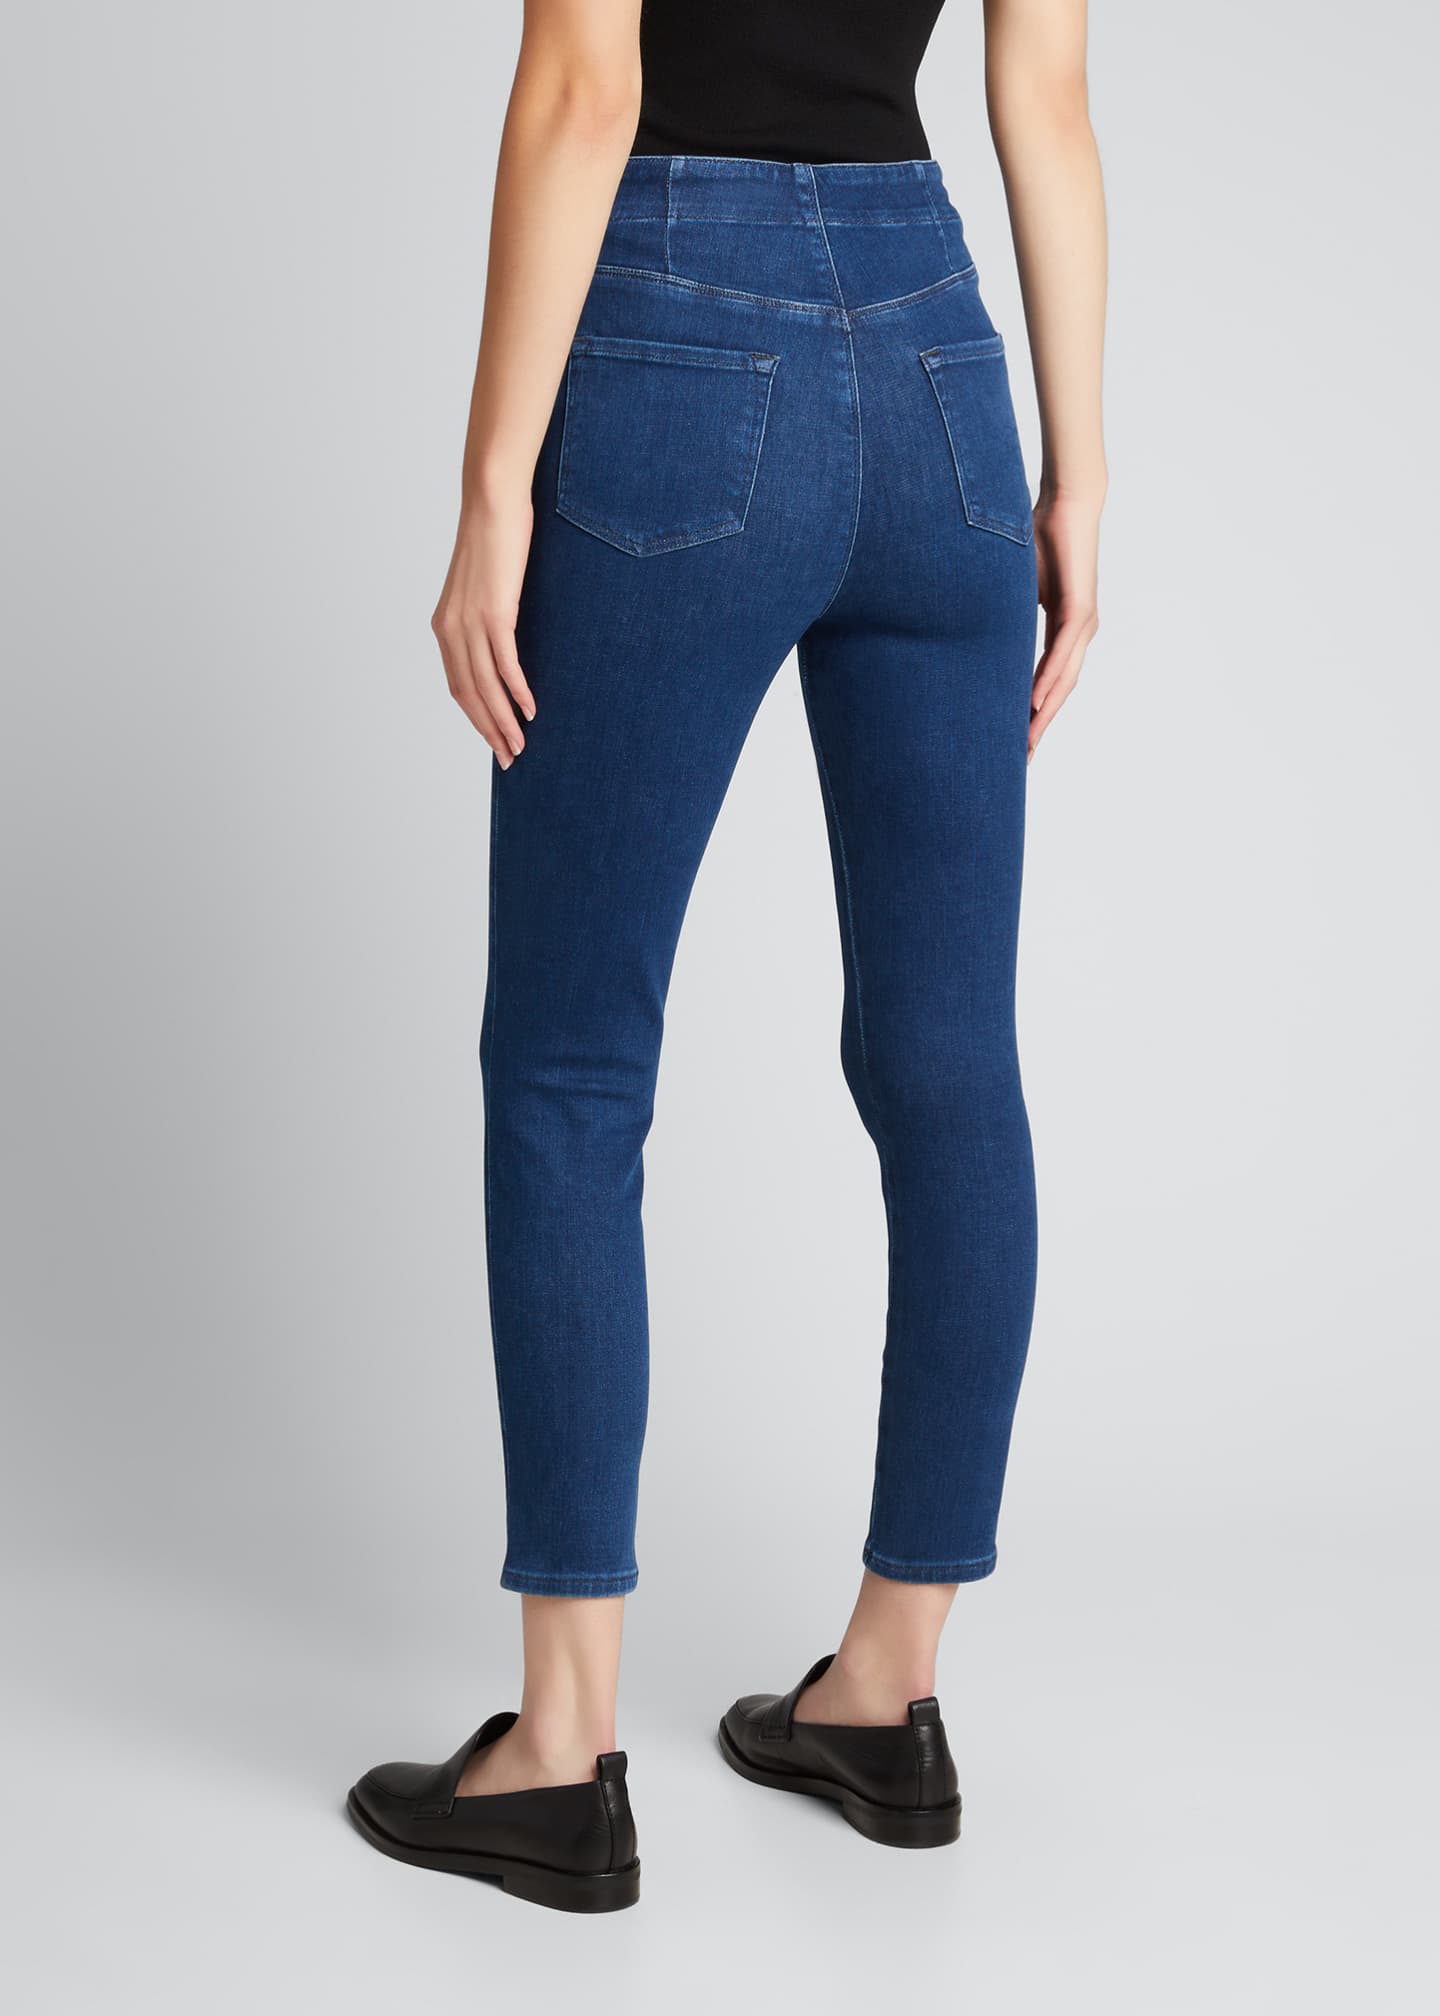 J Brand Natasha Sky High Cropped Skinny Jeans - Bergdorf Goodman